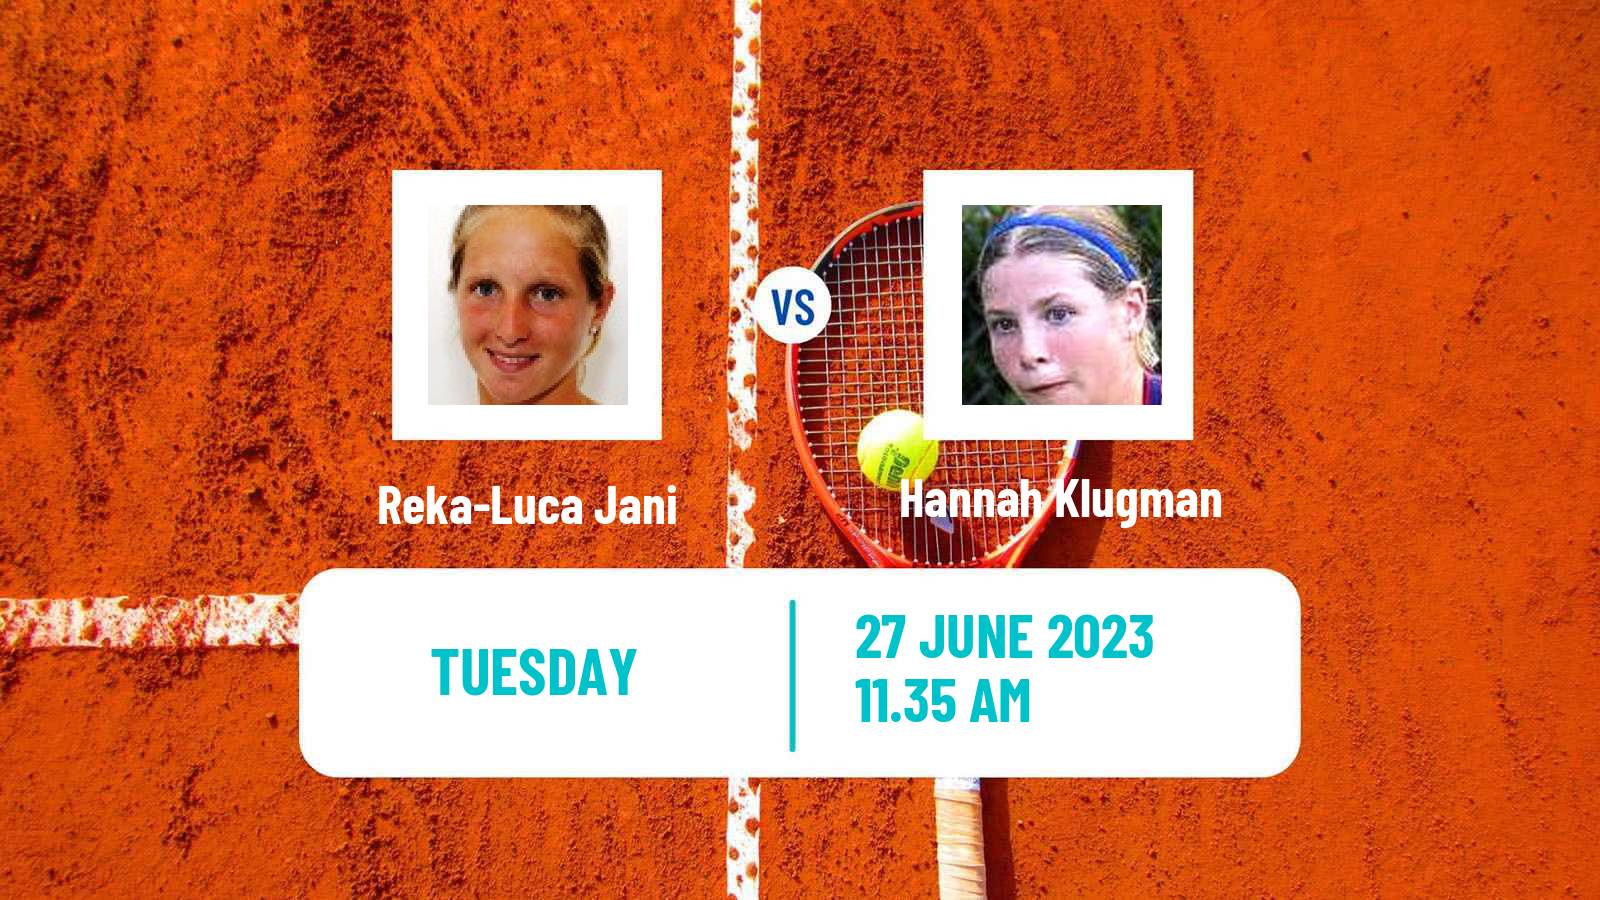 Tennis WTA Wimbledon Reka-Luca Jani - Hannah Klugman